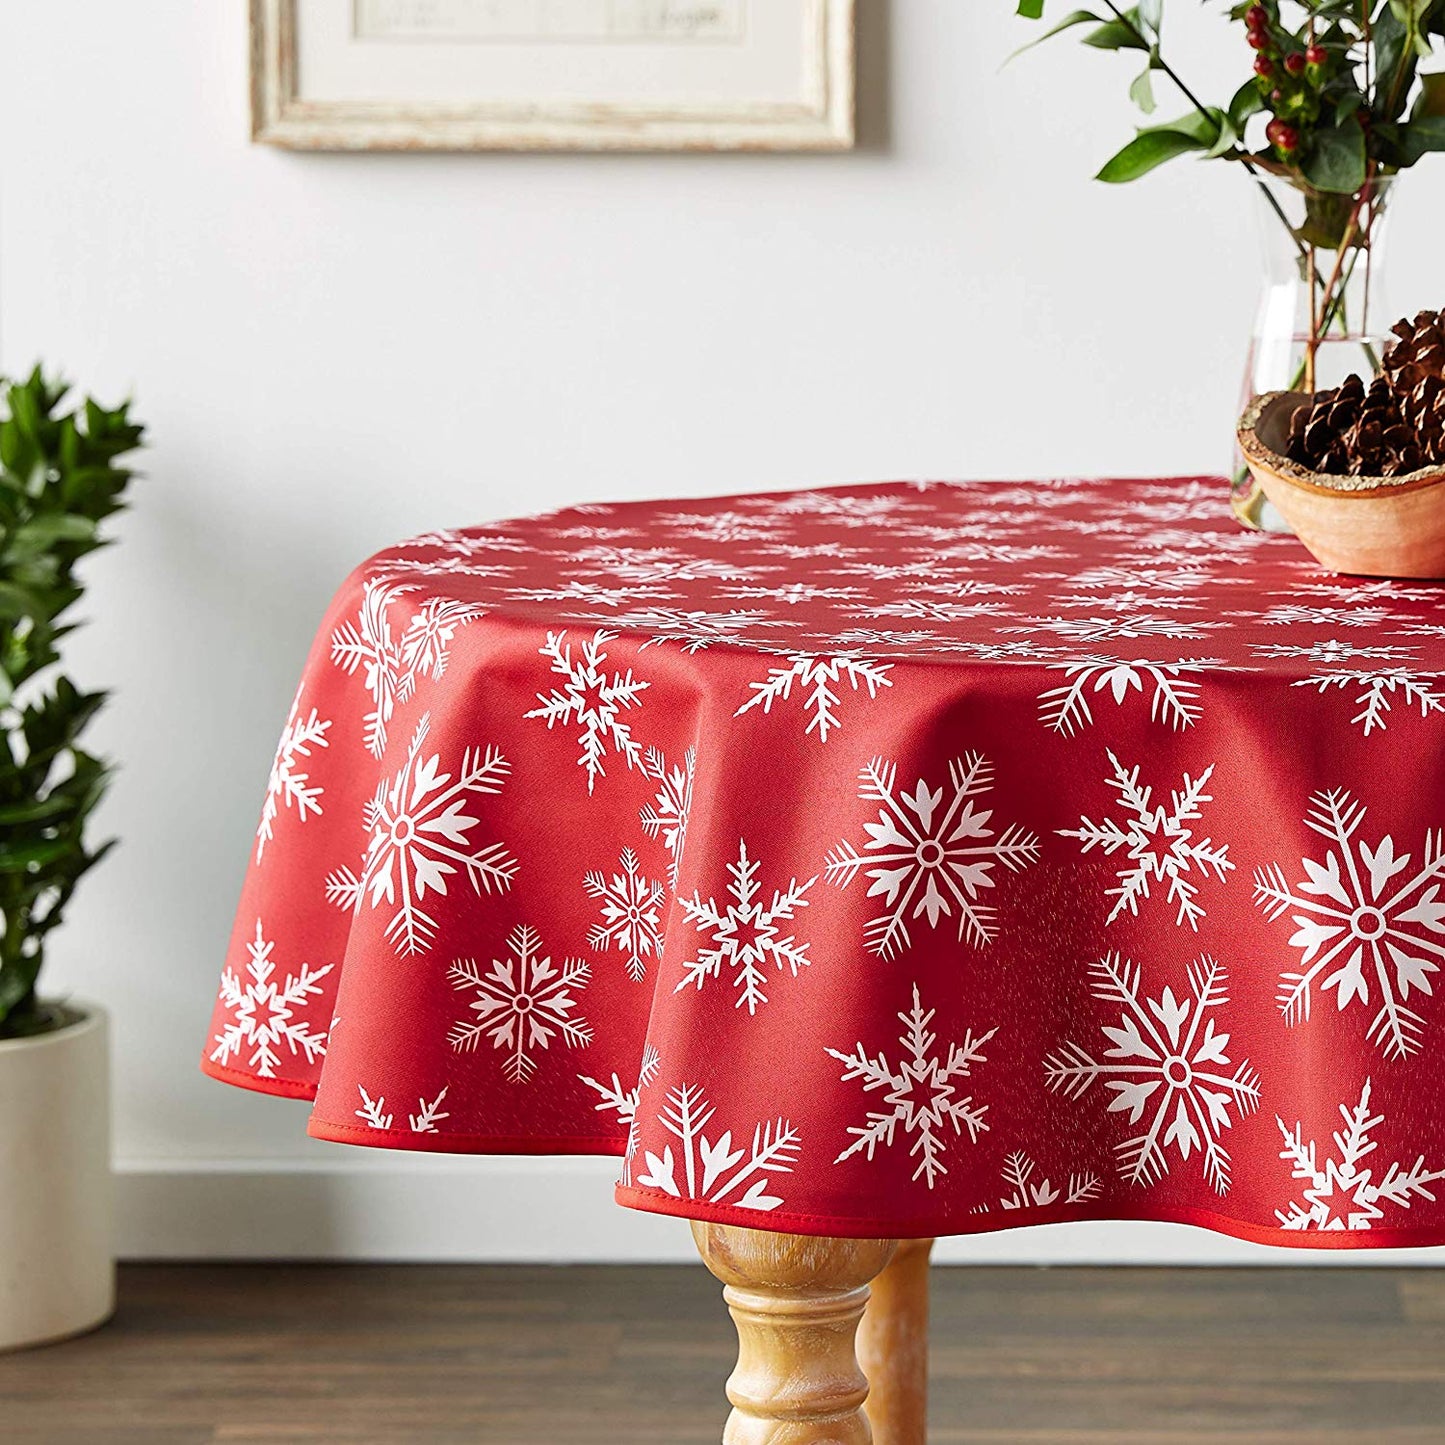 European Christmas Snowflakes Design Red Tablecloths